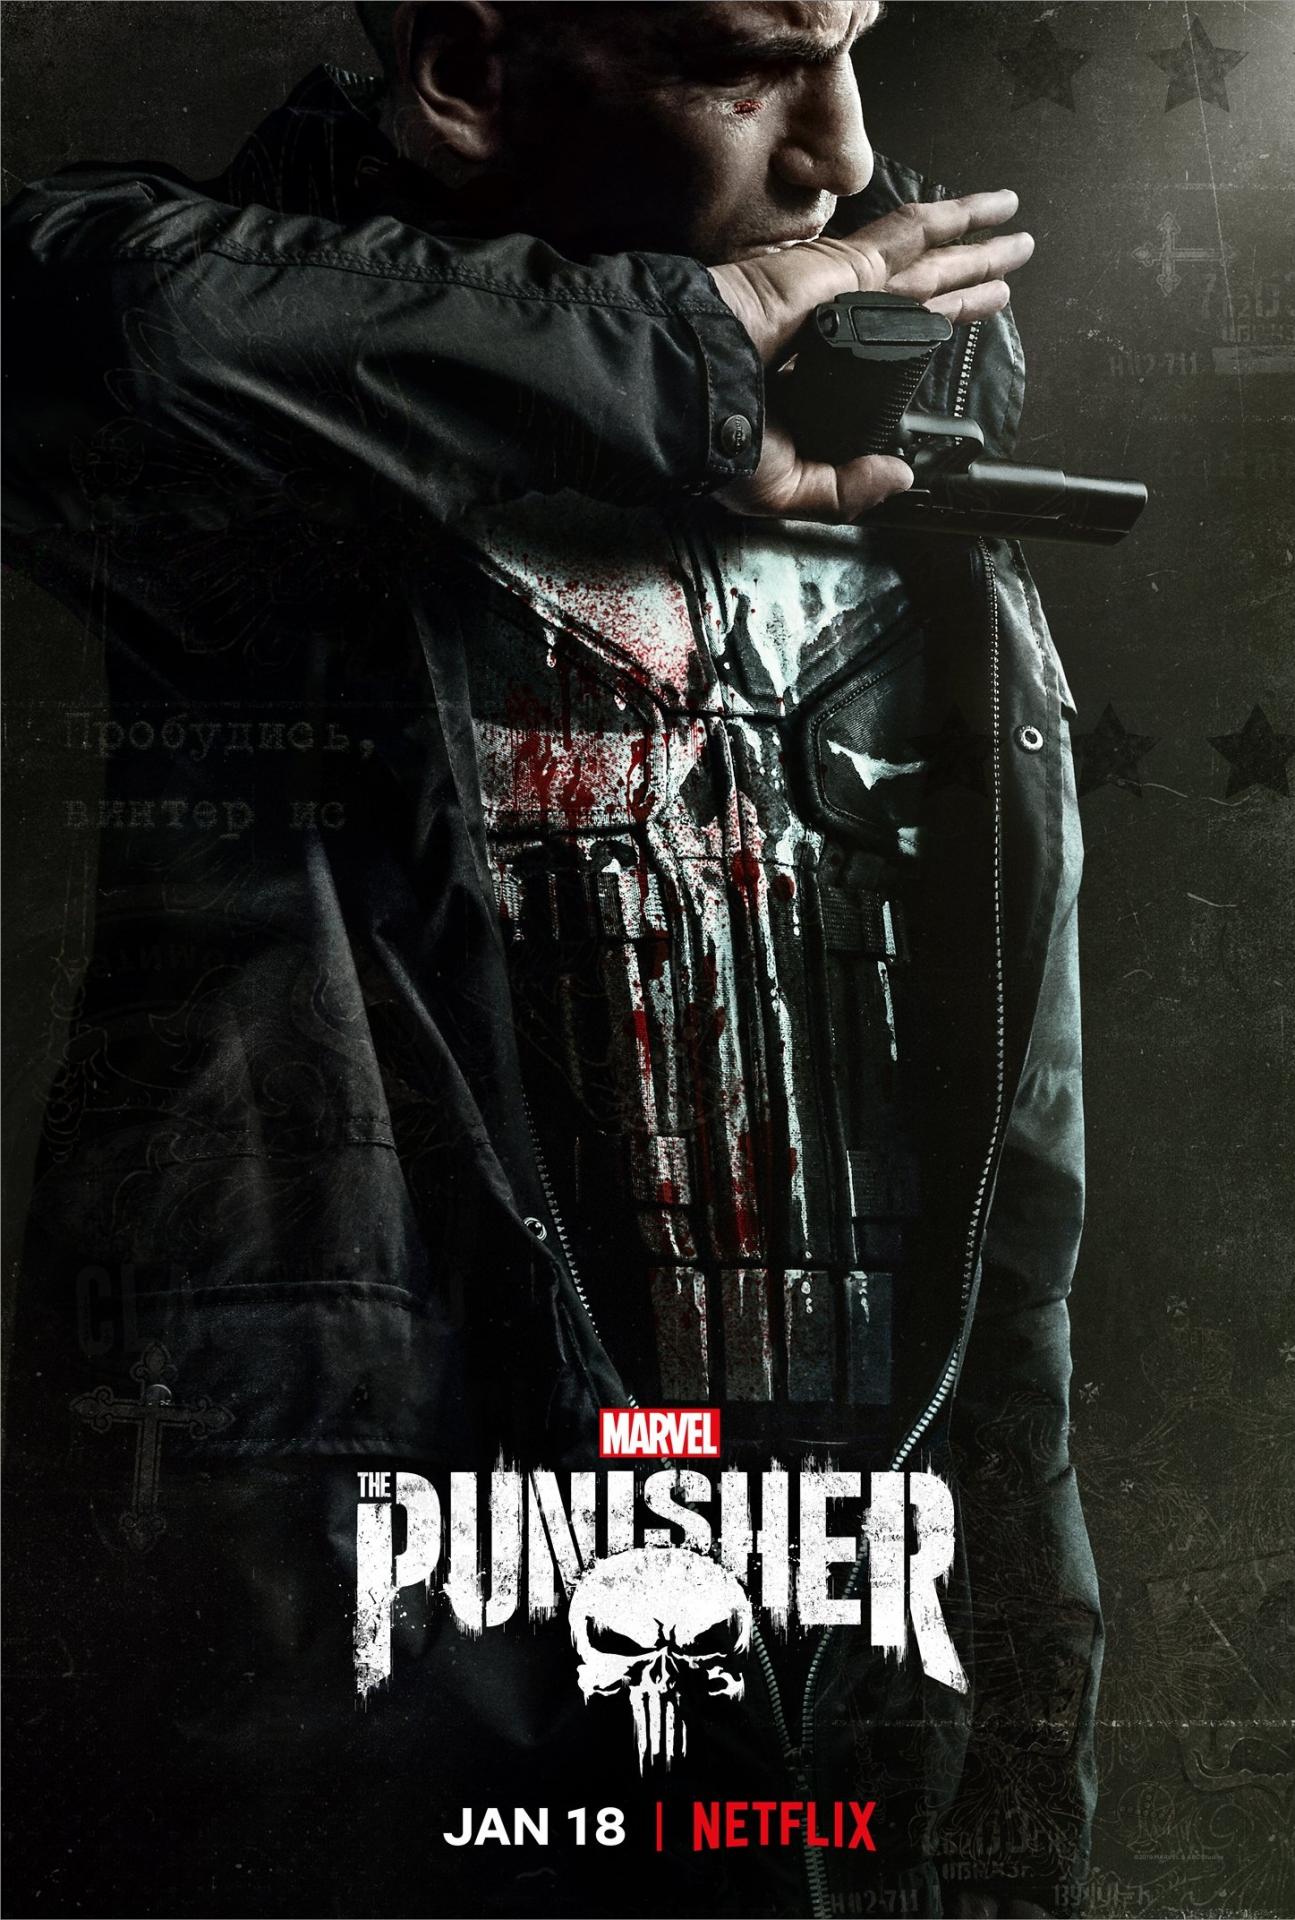 The punisher season 2 poster